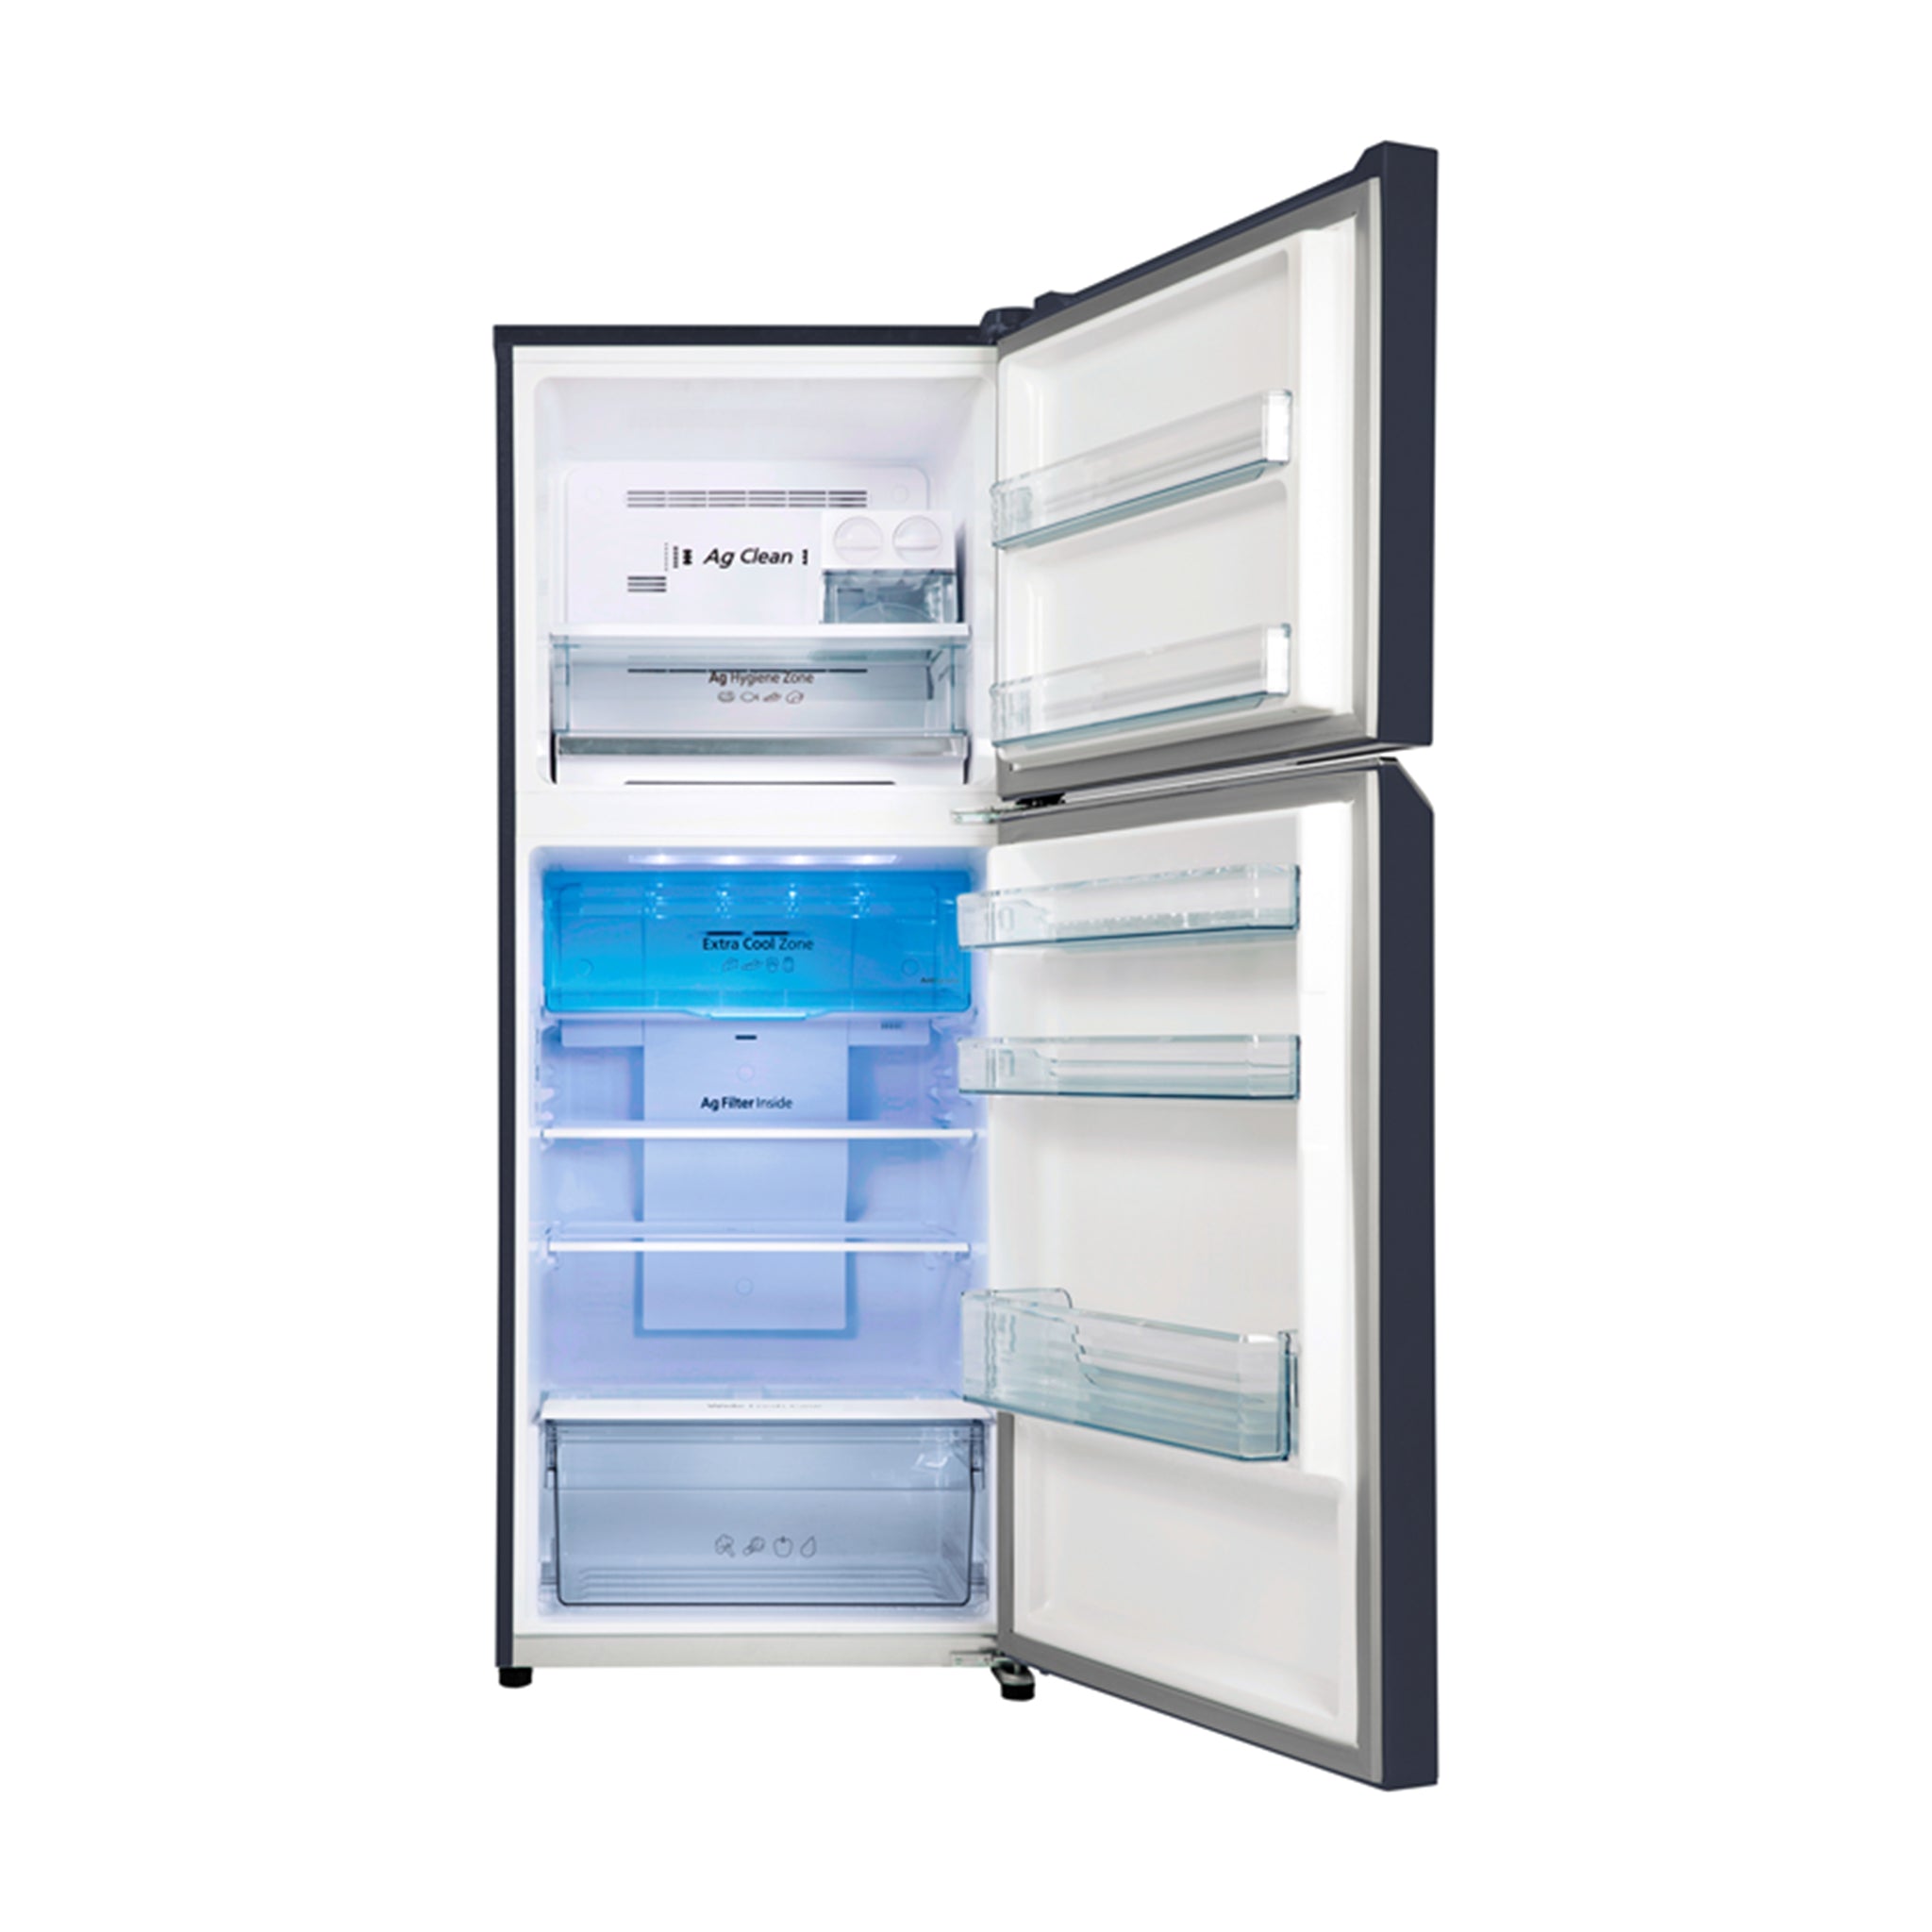 PANASONIC NR-TL381BPKP 2-door Top Freezer Refrigerator Panasonic